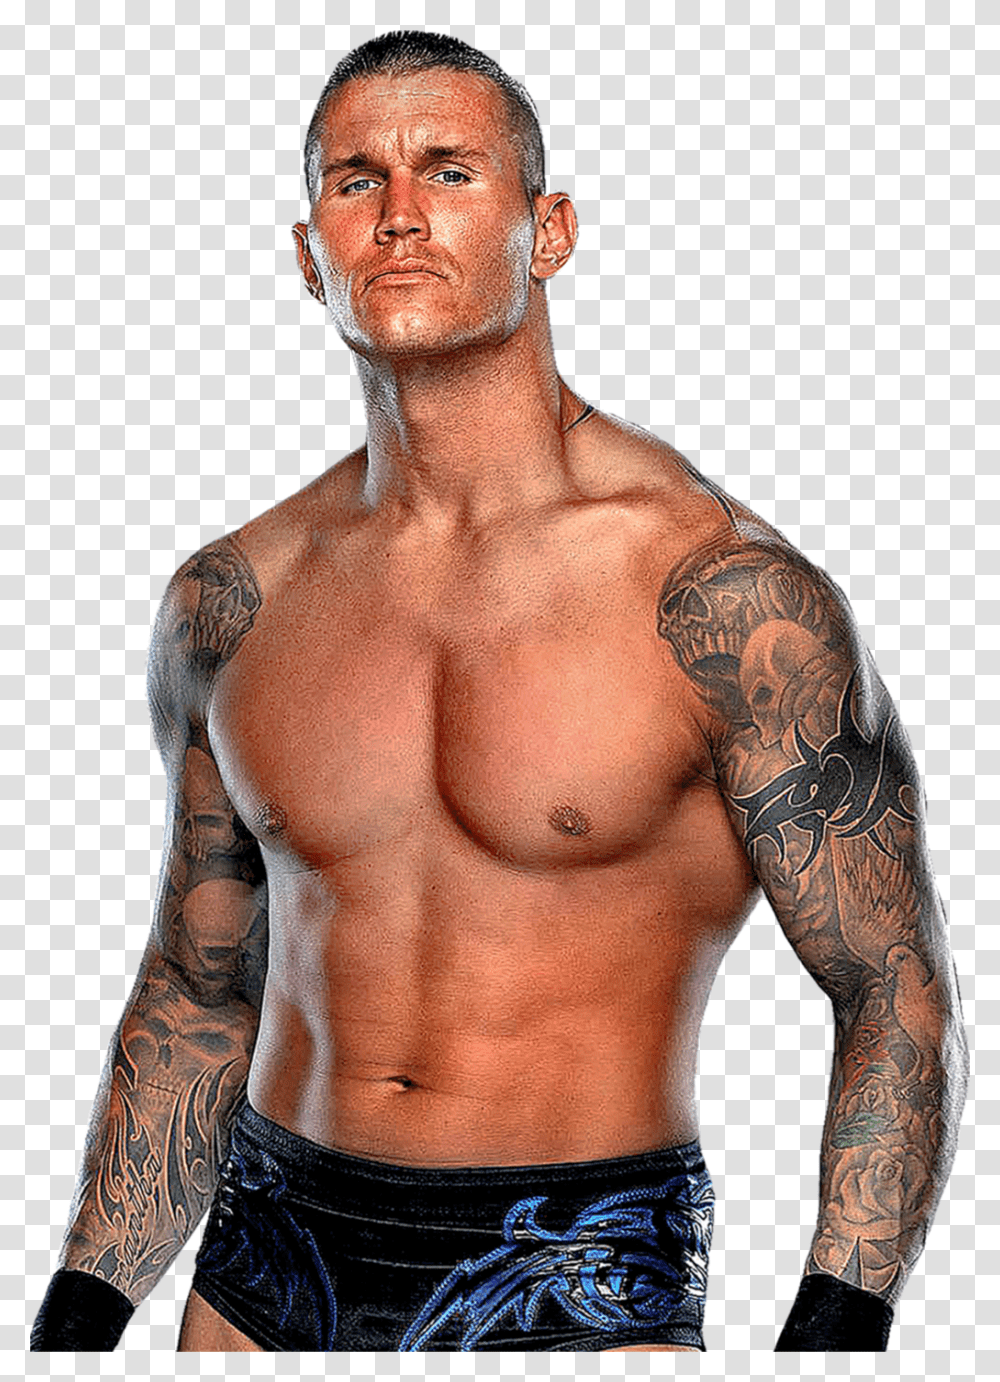 Randy Orton Tattoo Wallpaper Hd 2016 Download Randy Orton Arm Tattoos, Skin, Person, Human, Torso Transparent Png